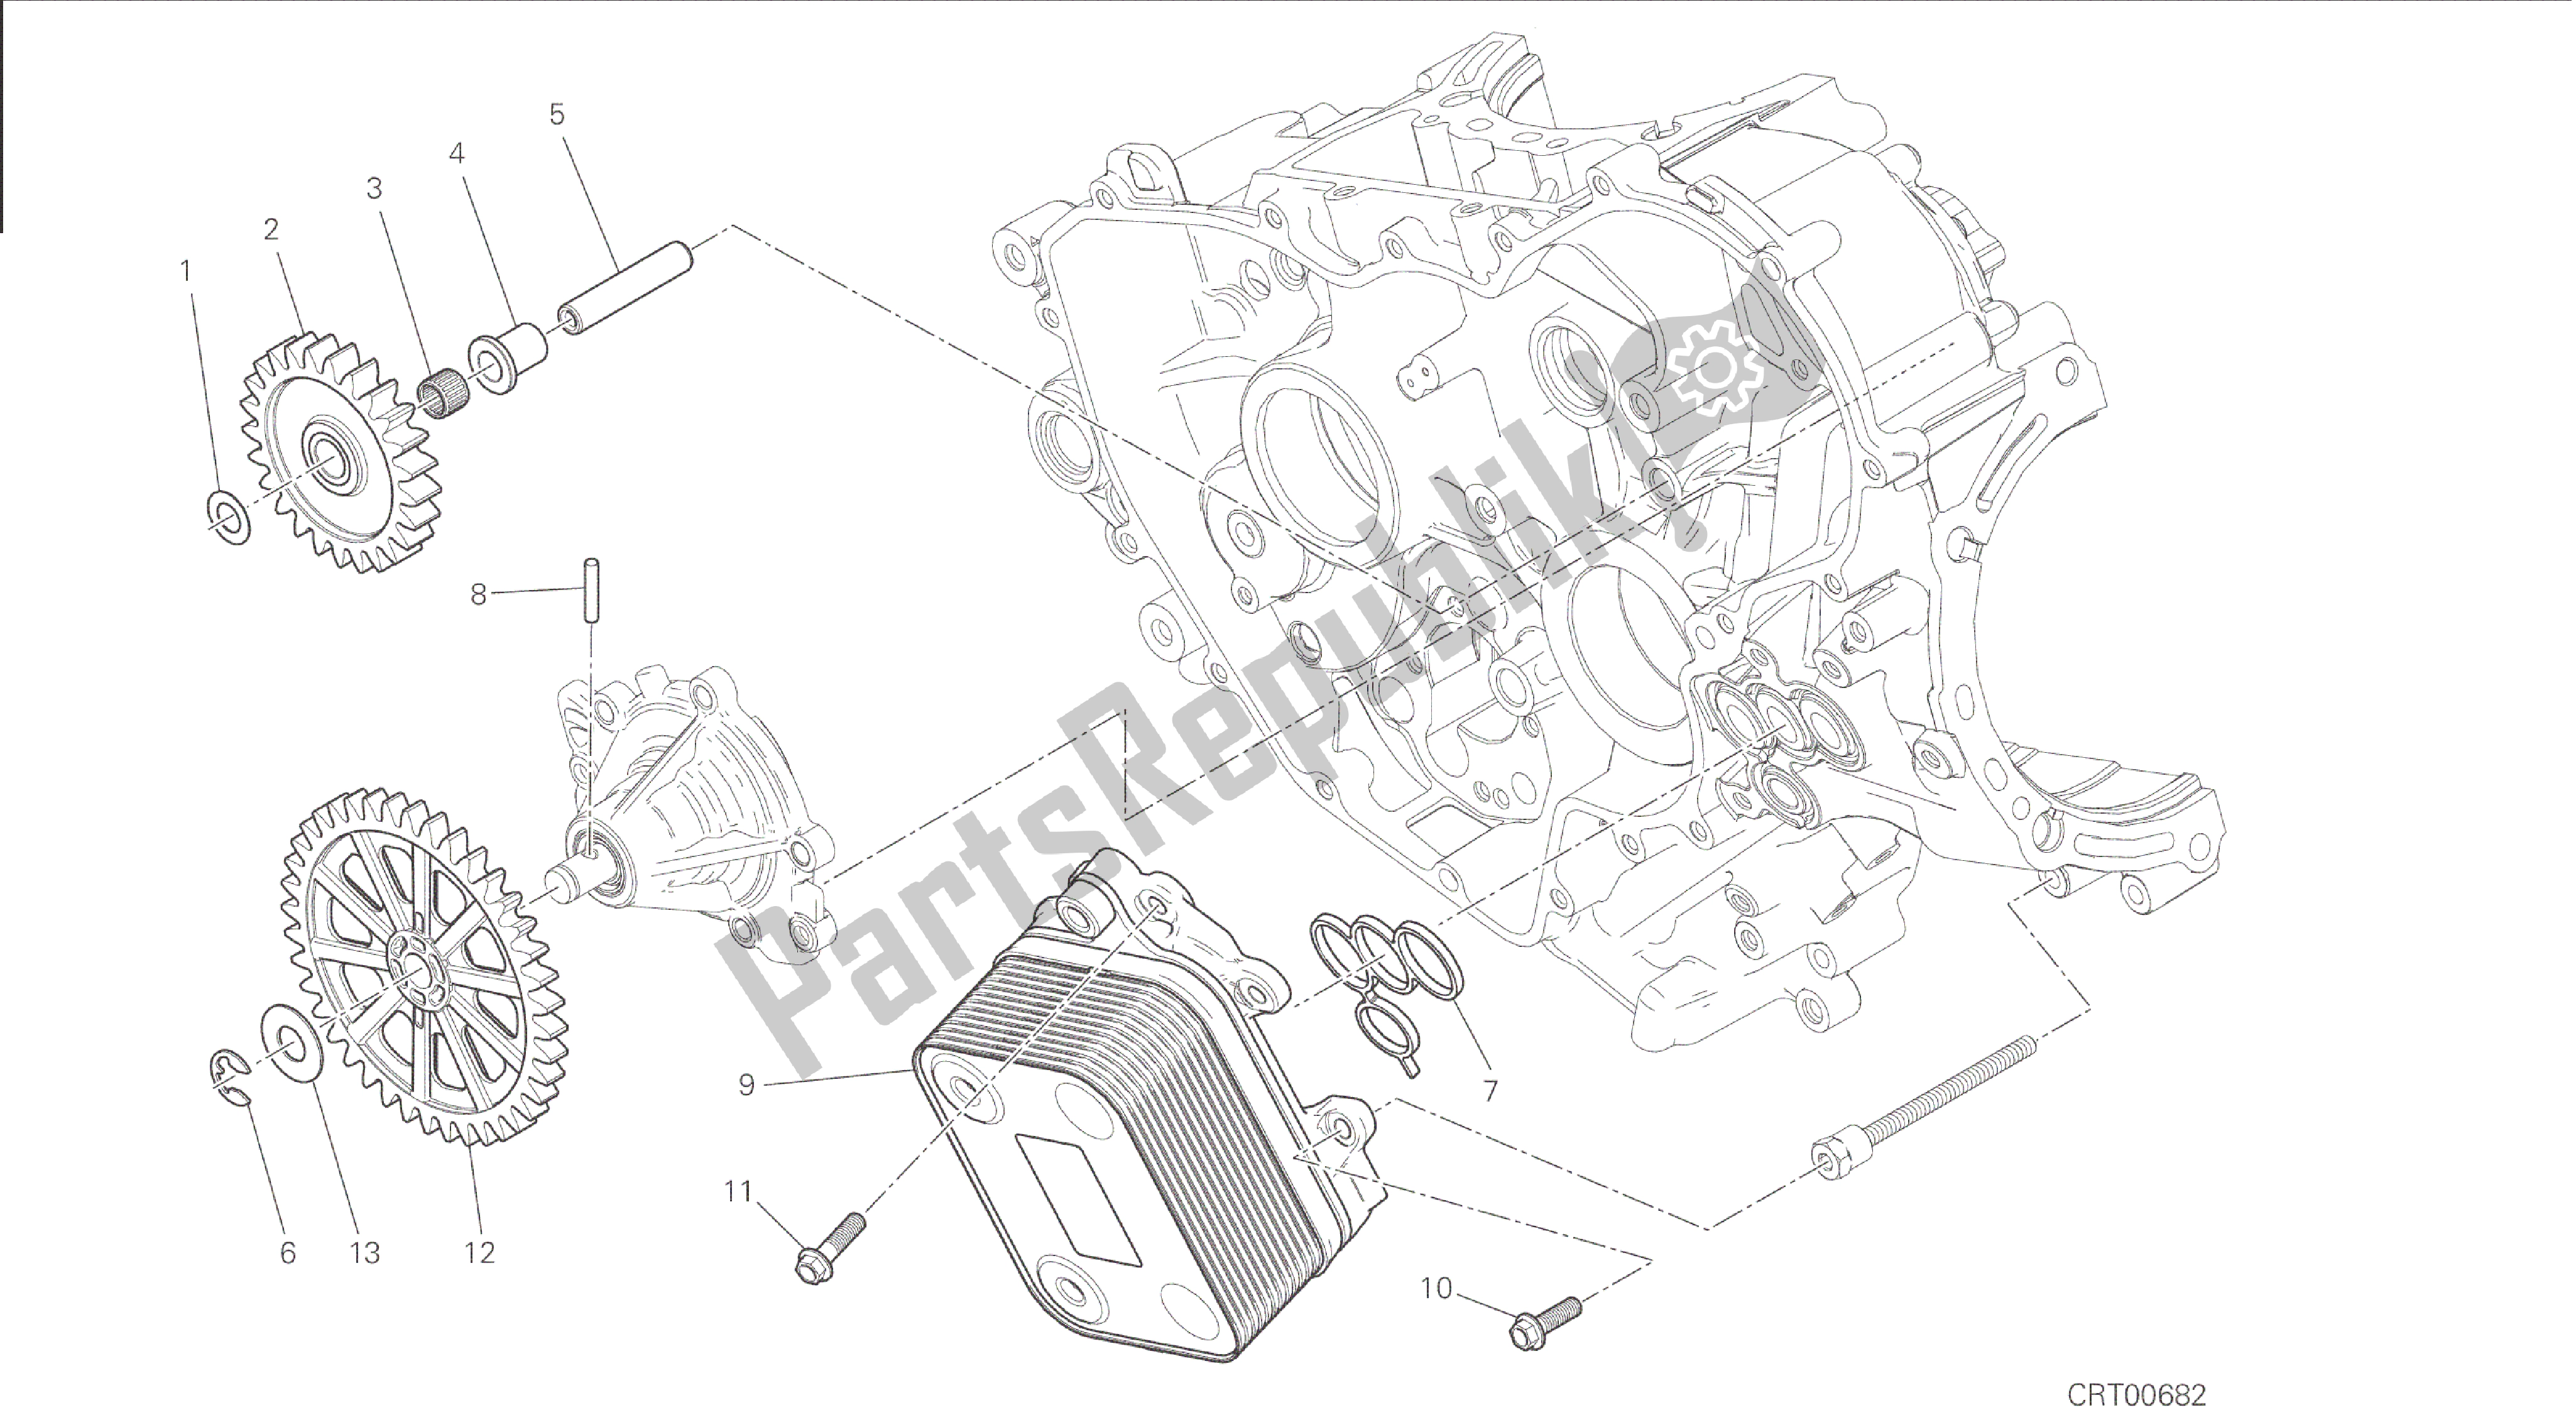 Alle onderdelen voor de Tekening 011 - Pompa Acqua [mod: 1199 R; Xst: Aus, Eur, Fra, Jap, Twn] Groepsmotor van de Ducati Panigale 1198 2015